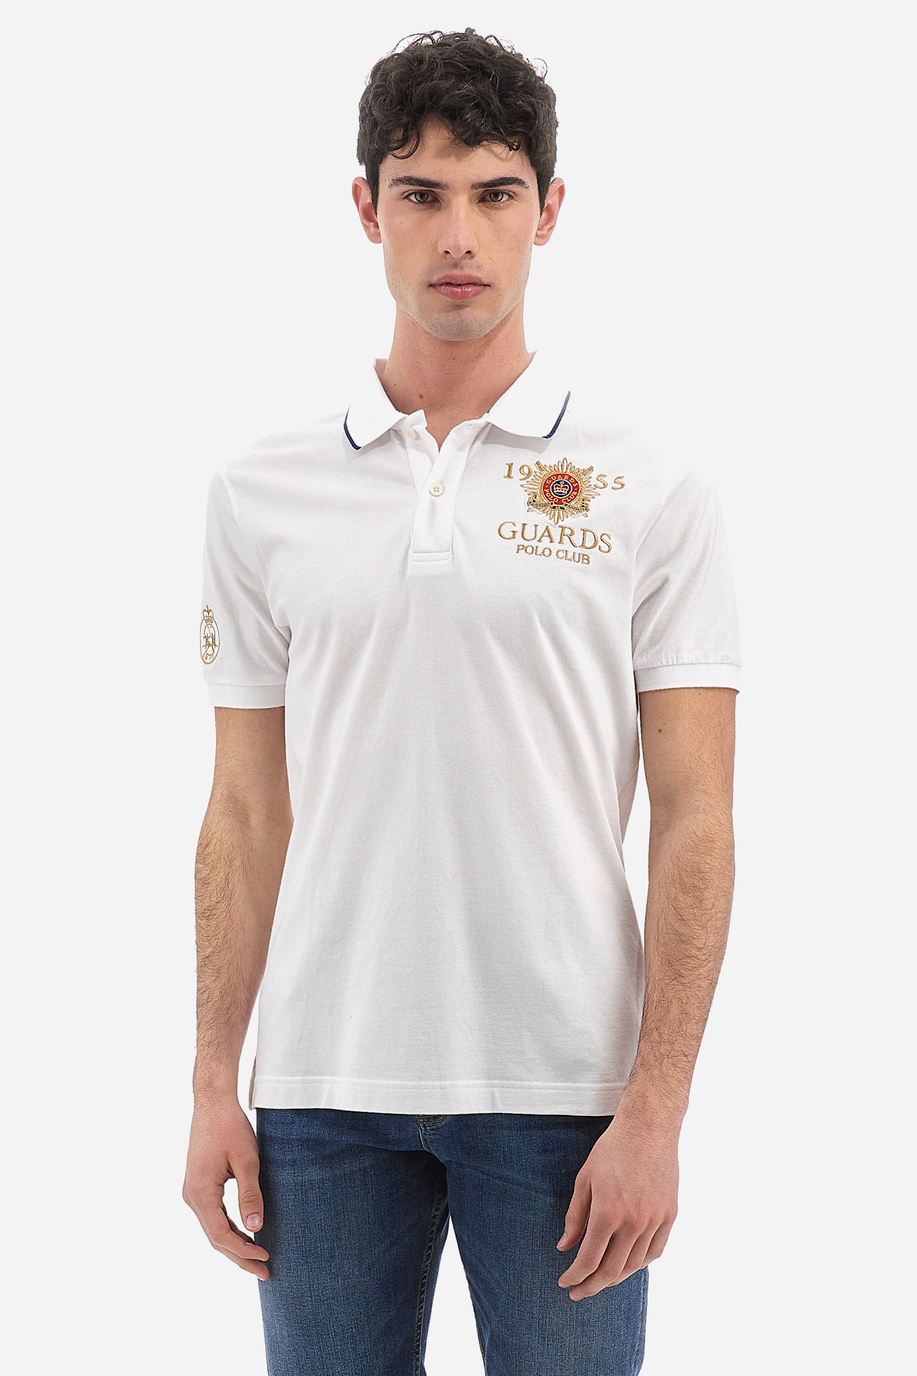 Herren-Kurzarm-Poloshirt aus Stretch-Baumwolle mit normaler Passform - Vilmos - Guards - England | La Martina - Official Online Shop